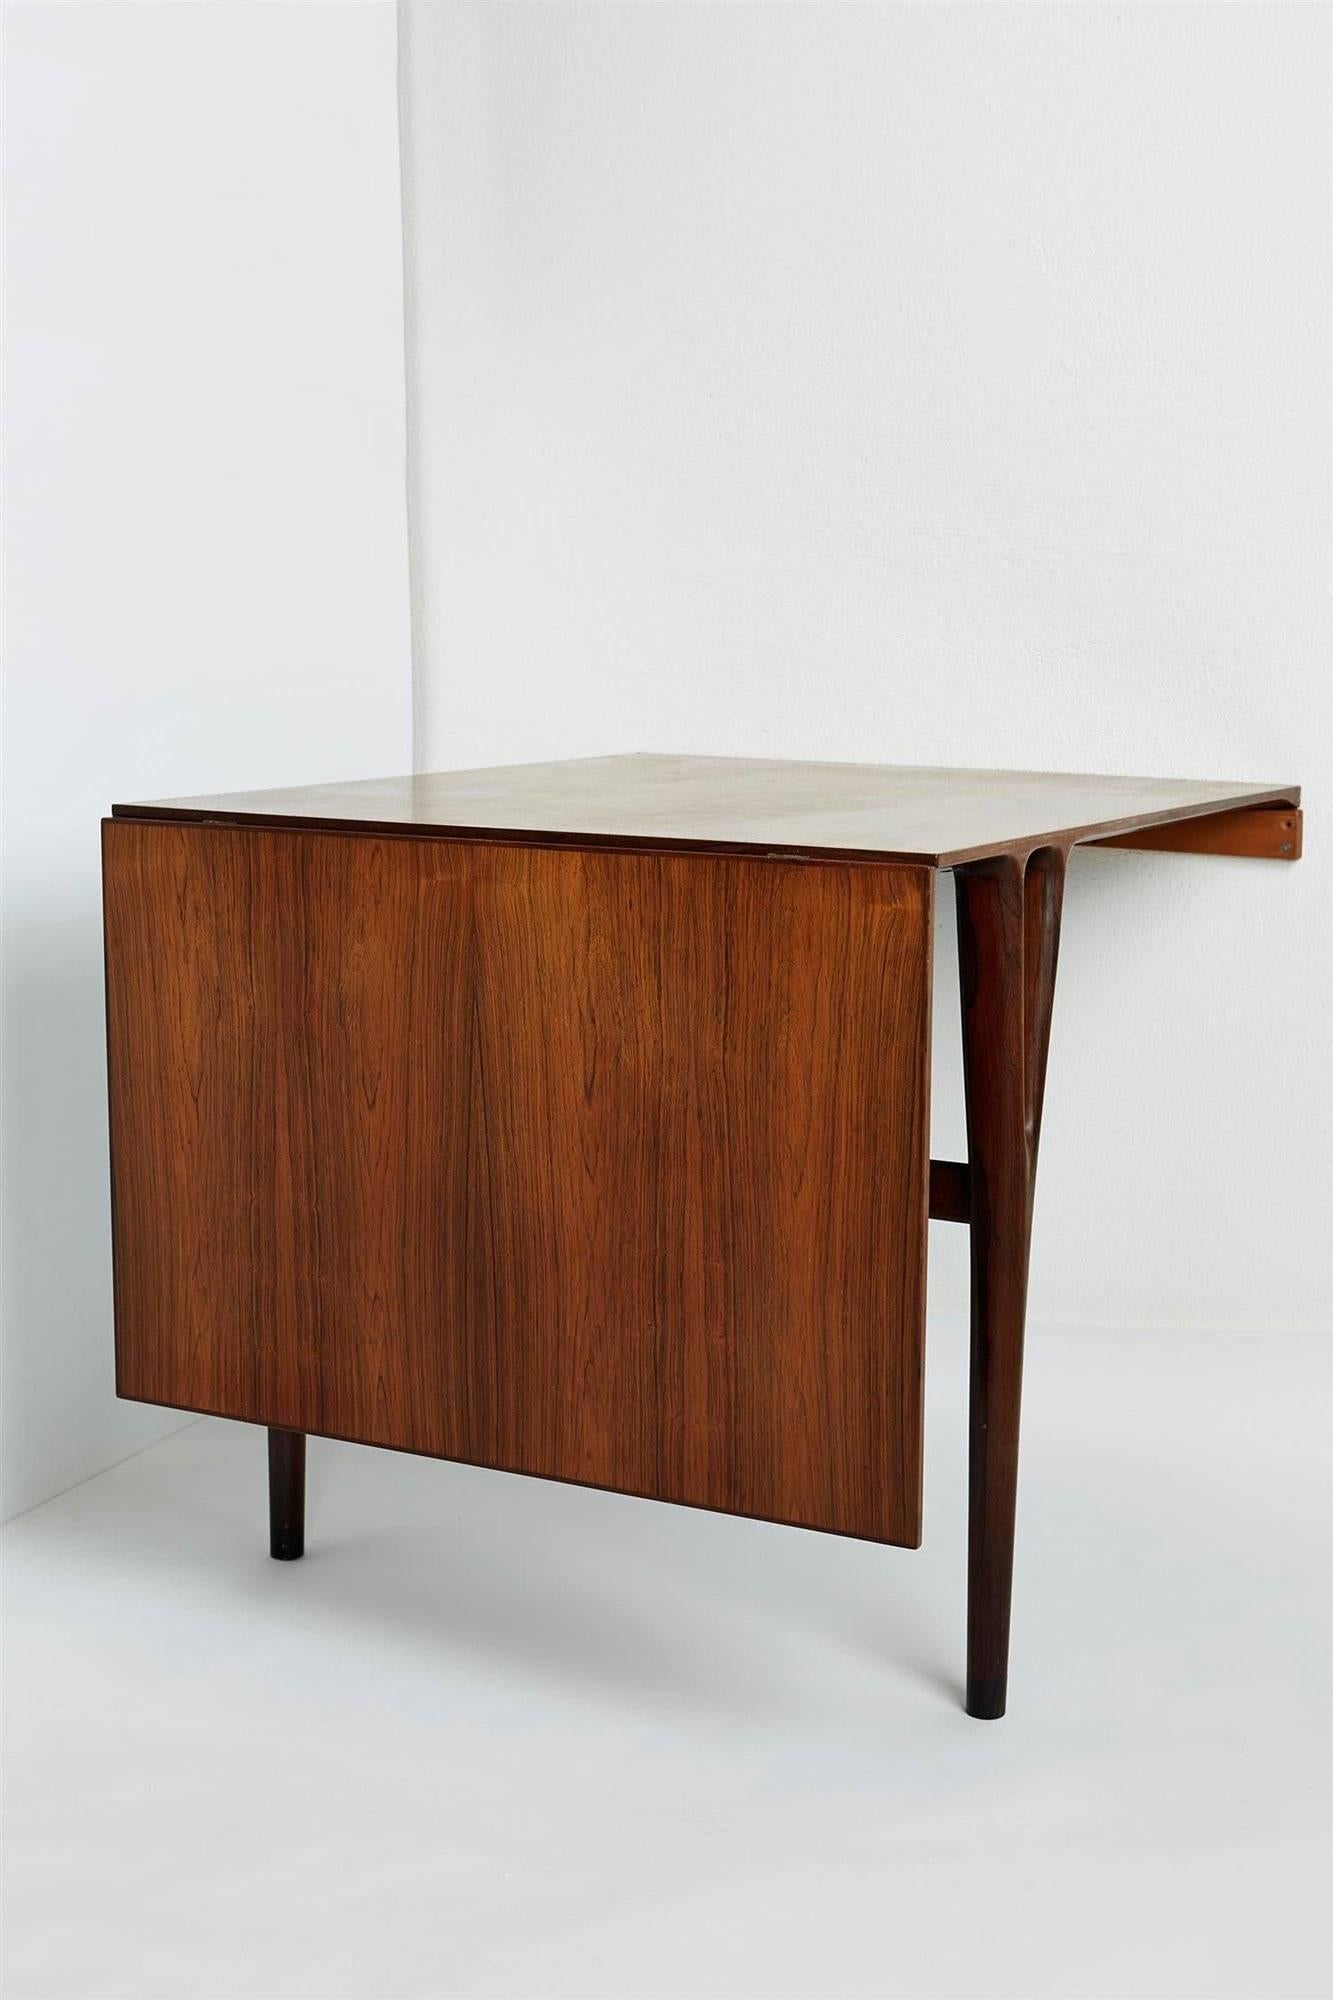 Wall hung table designed by Helge Vestergaard Jensen, for Peder Pedersen,
Denmark. 1950's.

Brazilian rosewood.

Dimensions:
H: 73 cm/ 28 3/4''
L: 90 cm/ 35 1/2''
Length when fully extended: 141 cm/ 4' 7 1/2''
D: 77 cm/ 30 1/2''